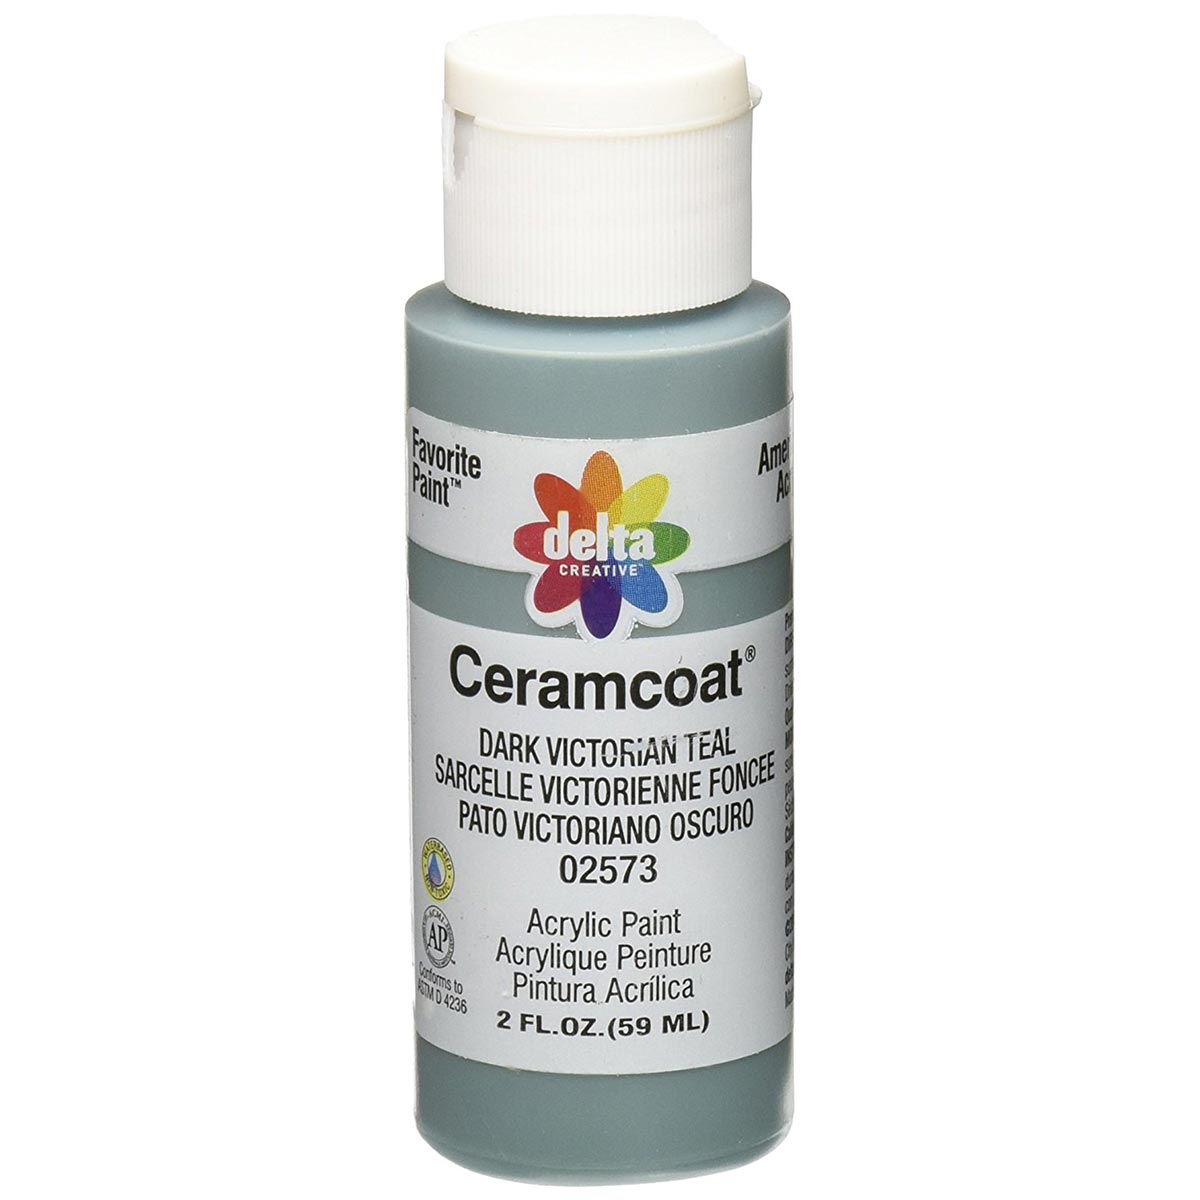 Delta Ceramcoat Acrylic Paint - Dark Victorian Teal, 2 oz. - 025730202W